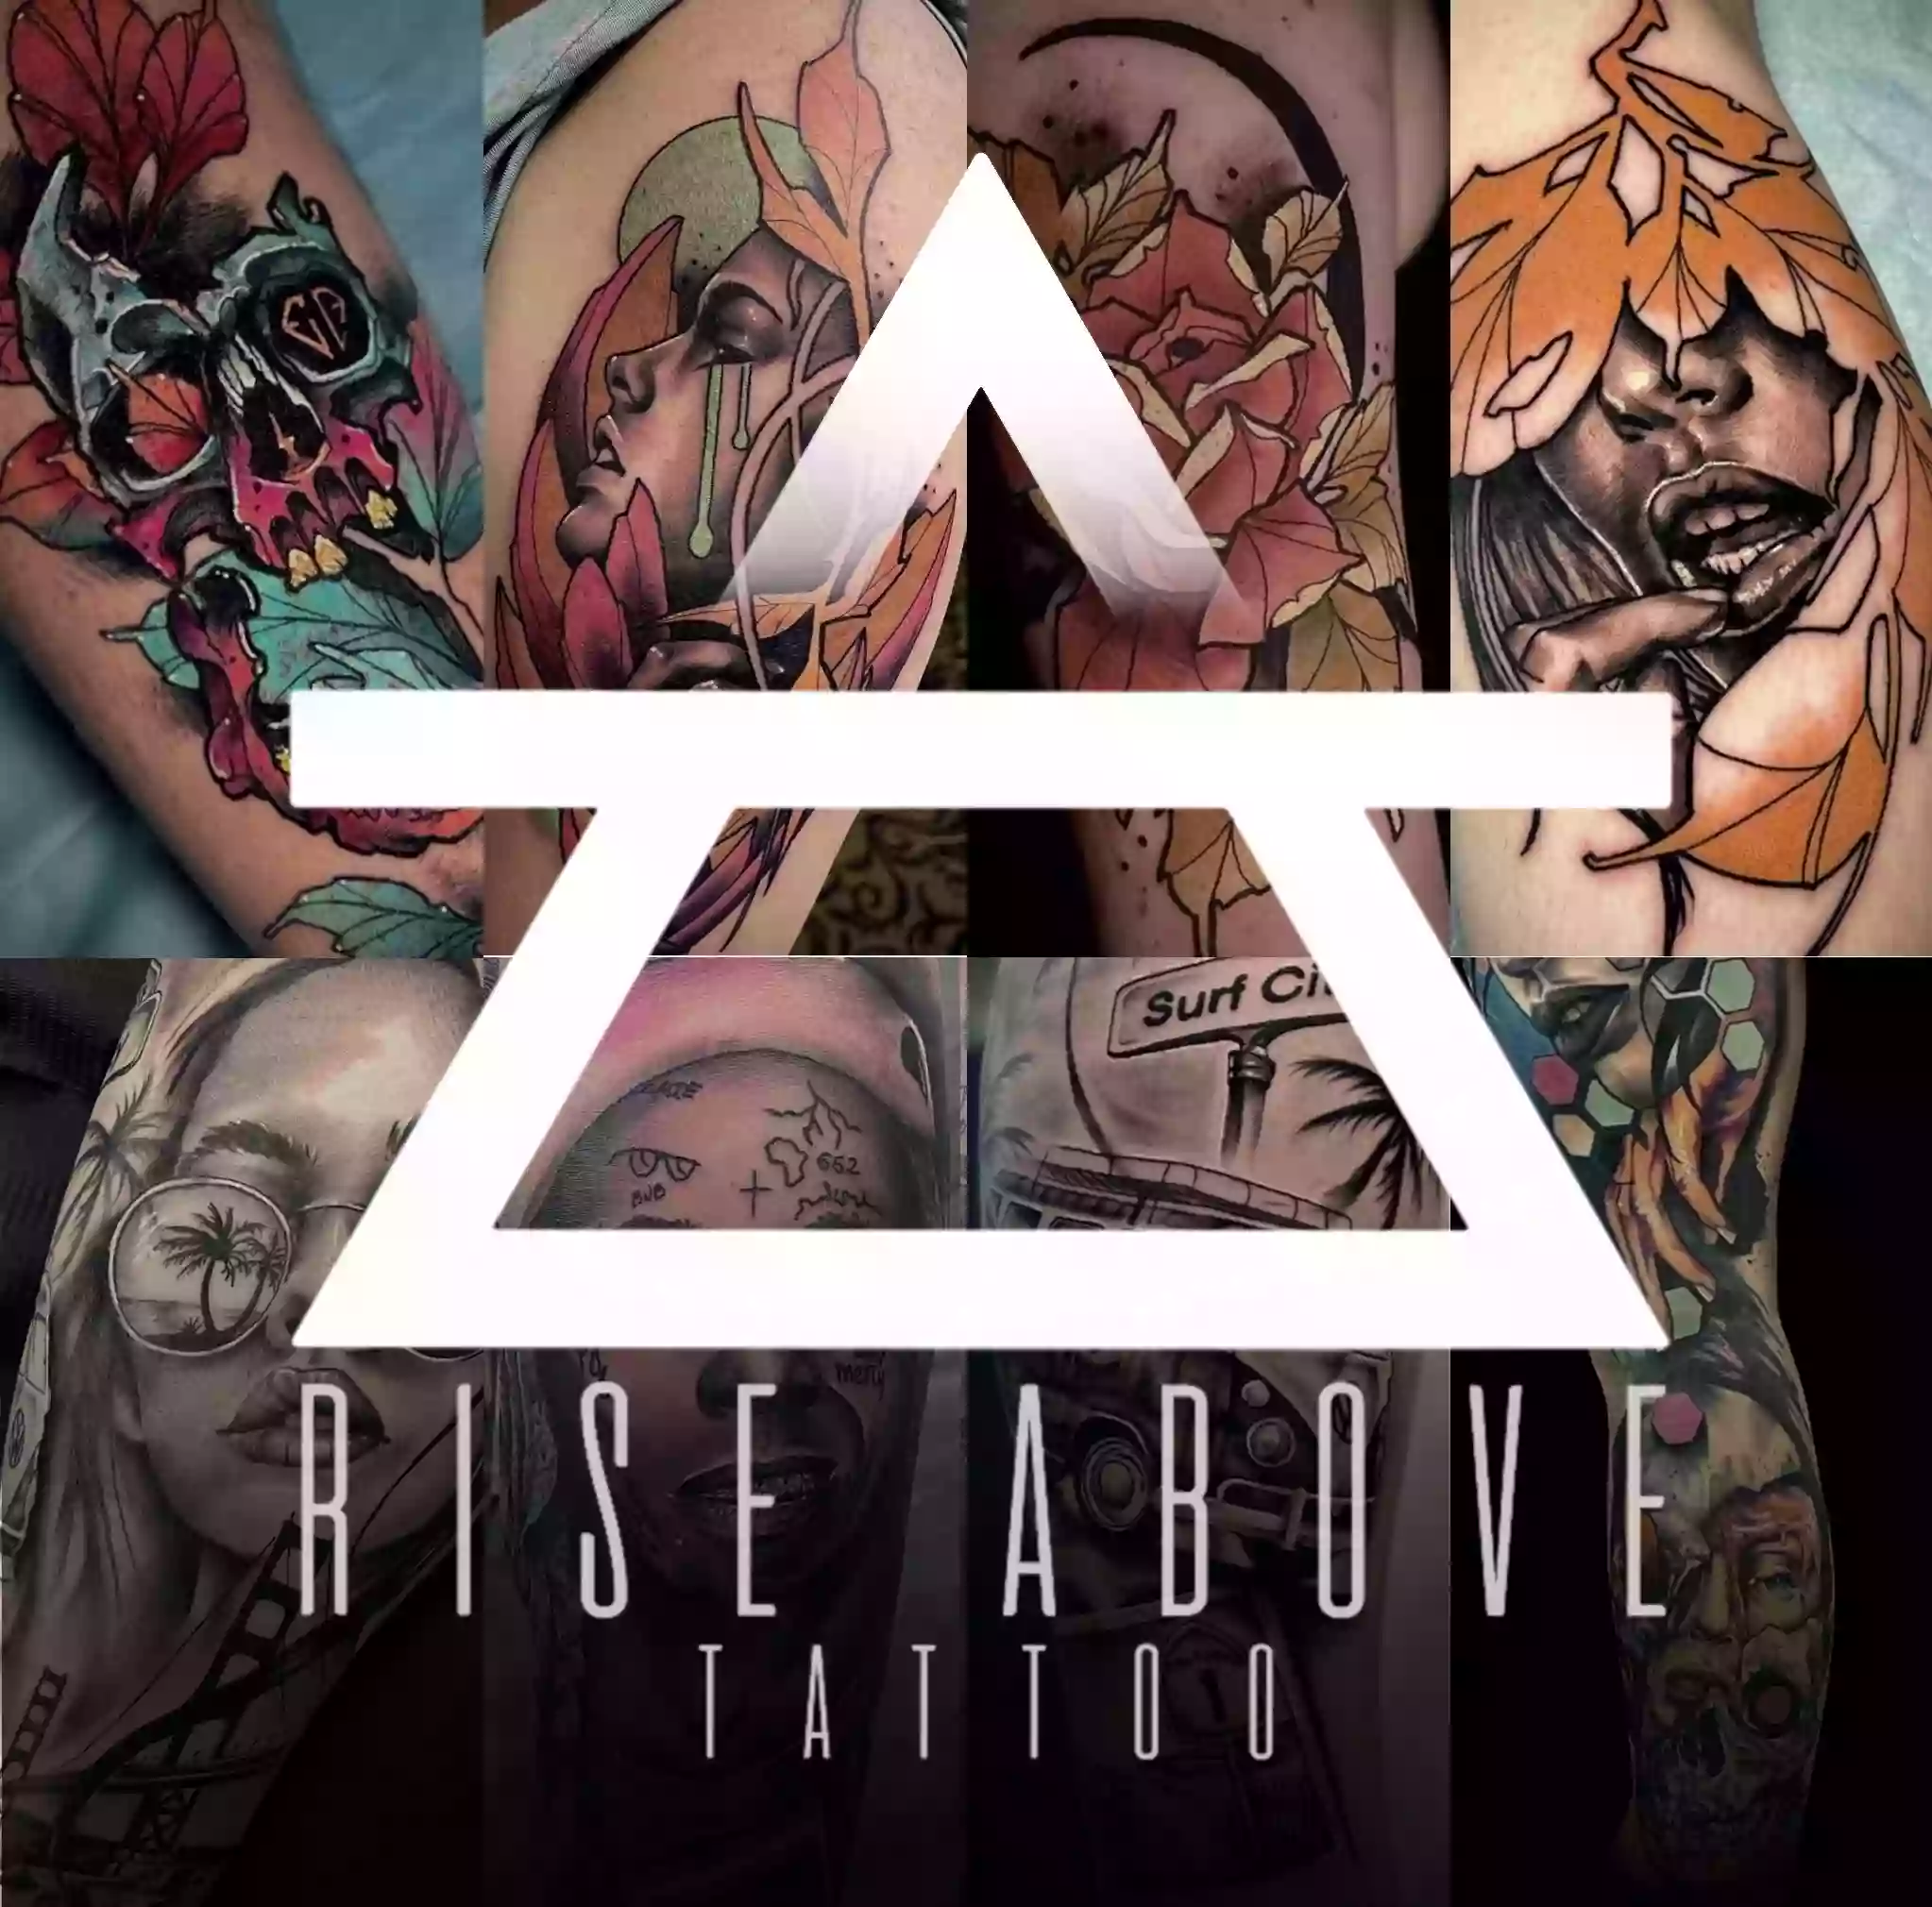 Rise Above Tattoo